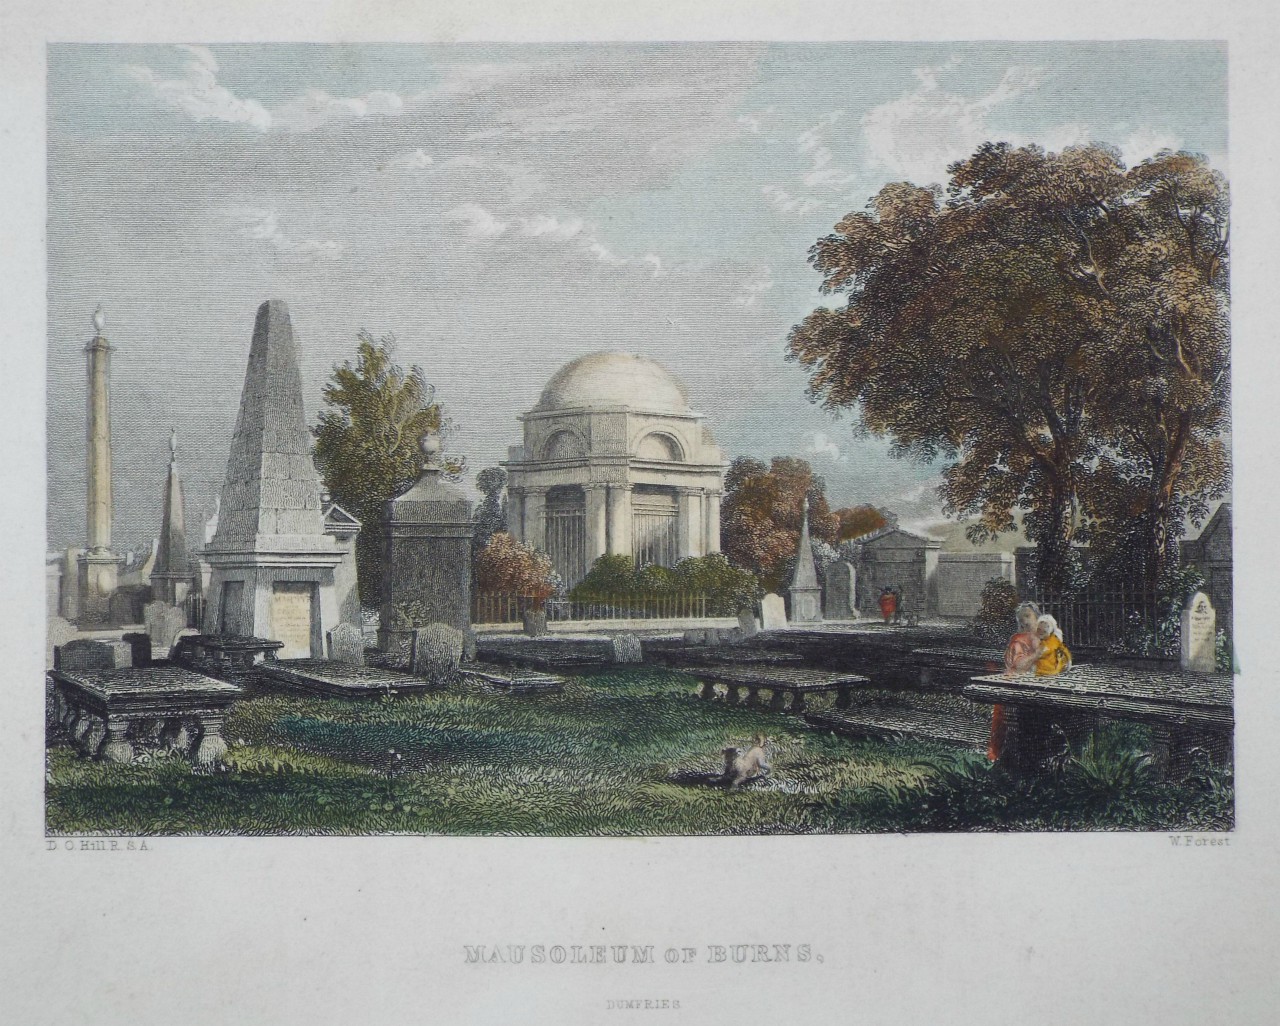 Print - Mausoleum of Burns, Dumfries - Forrest